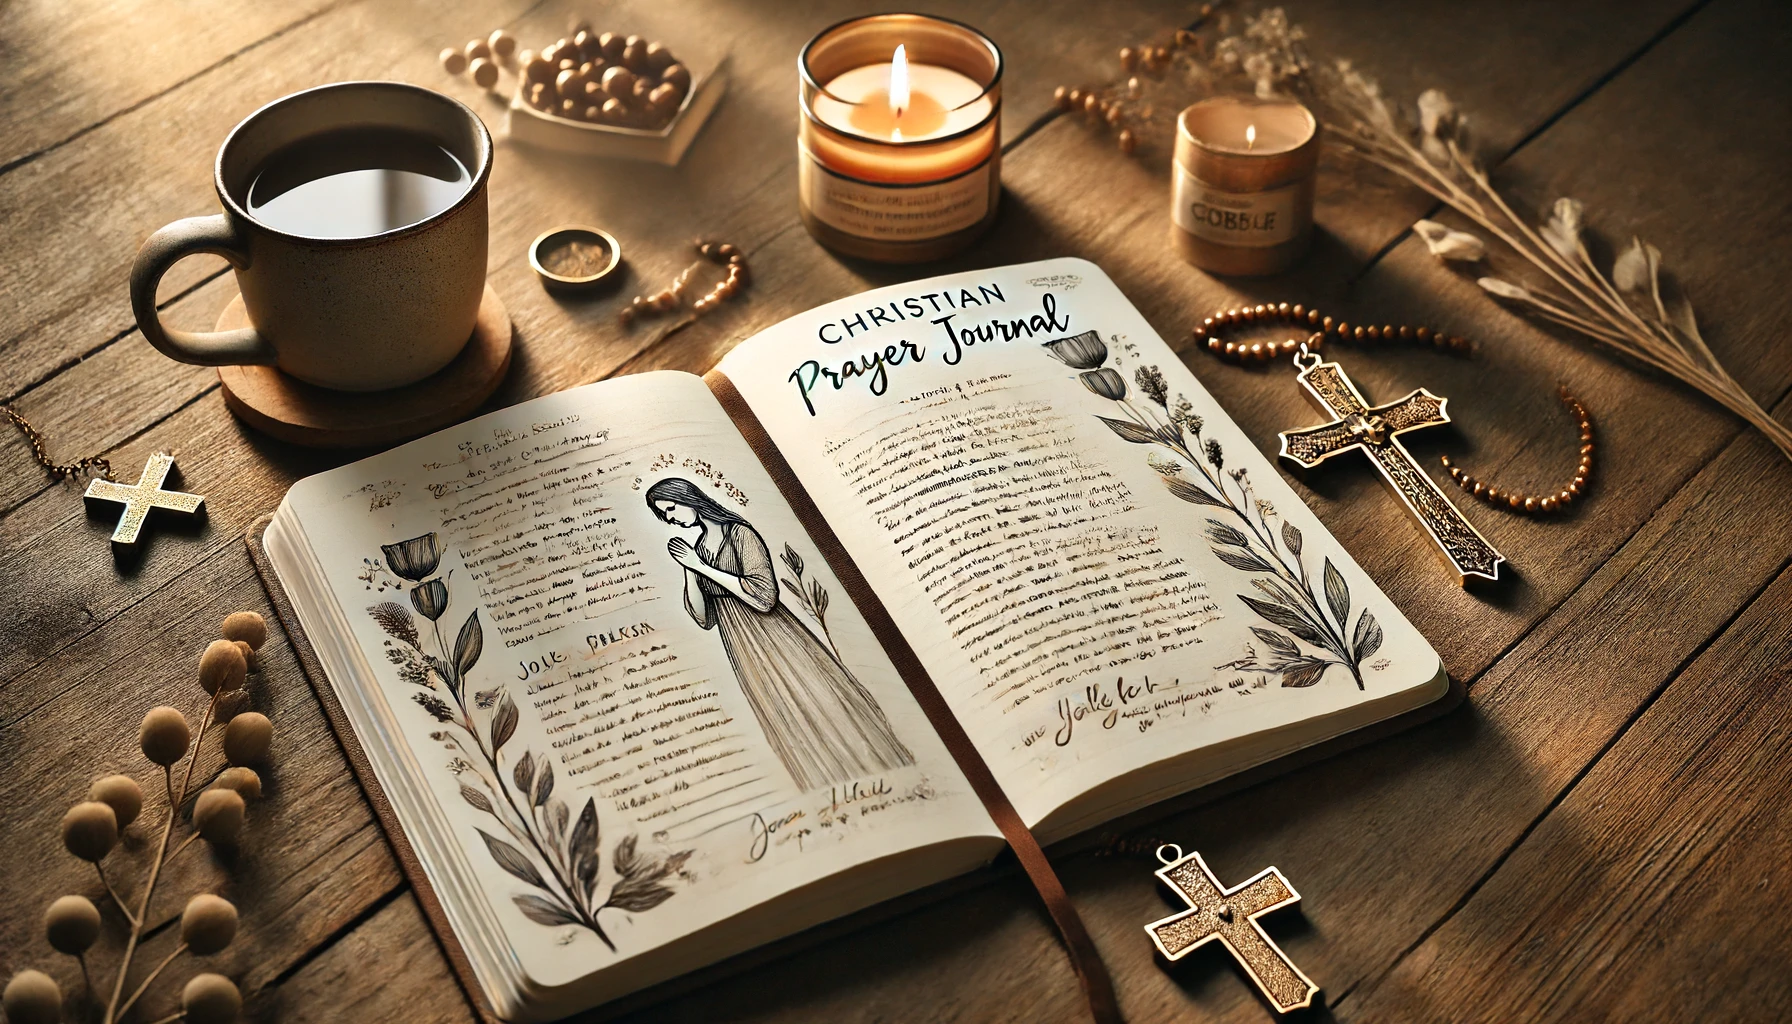 Pray journals for Christian gift ideas